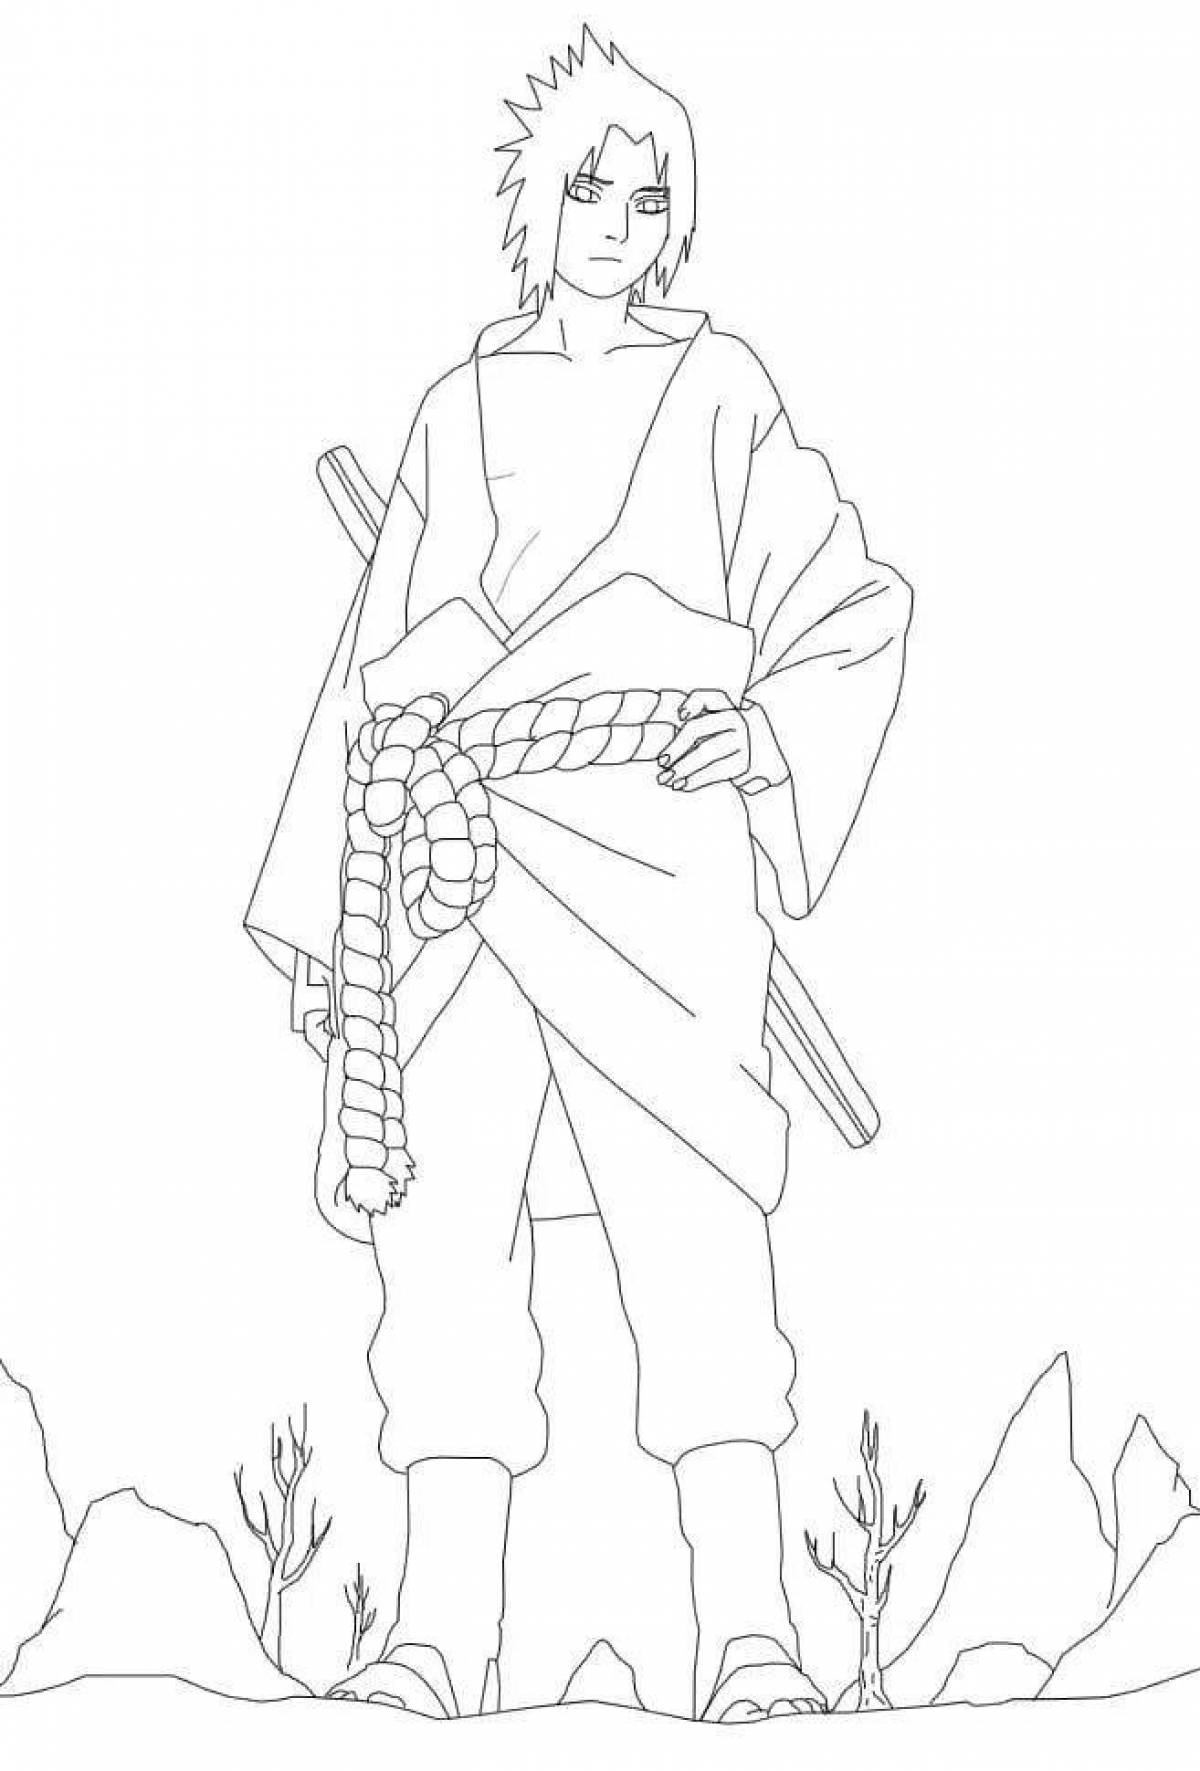 Charming uchiha sasuke coloring page